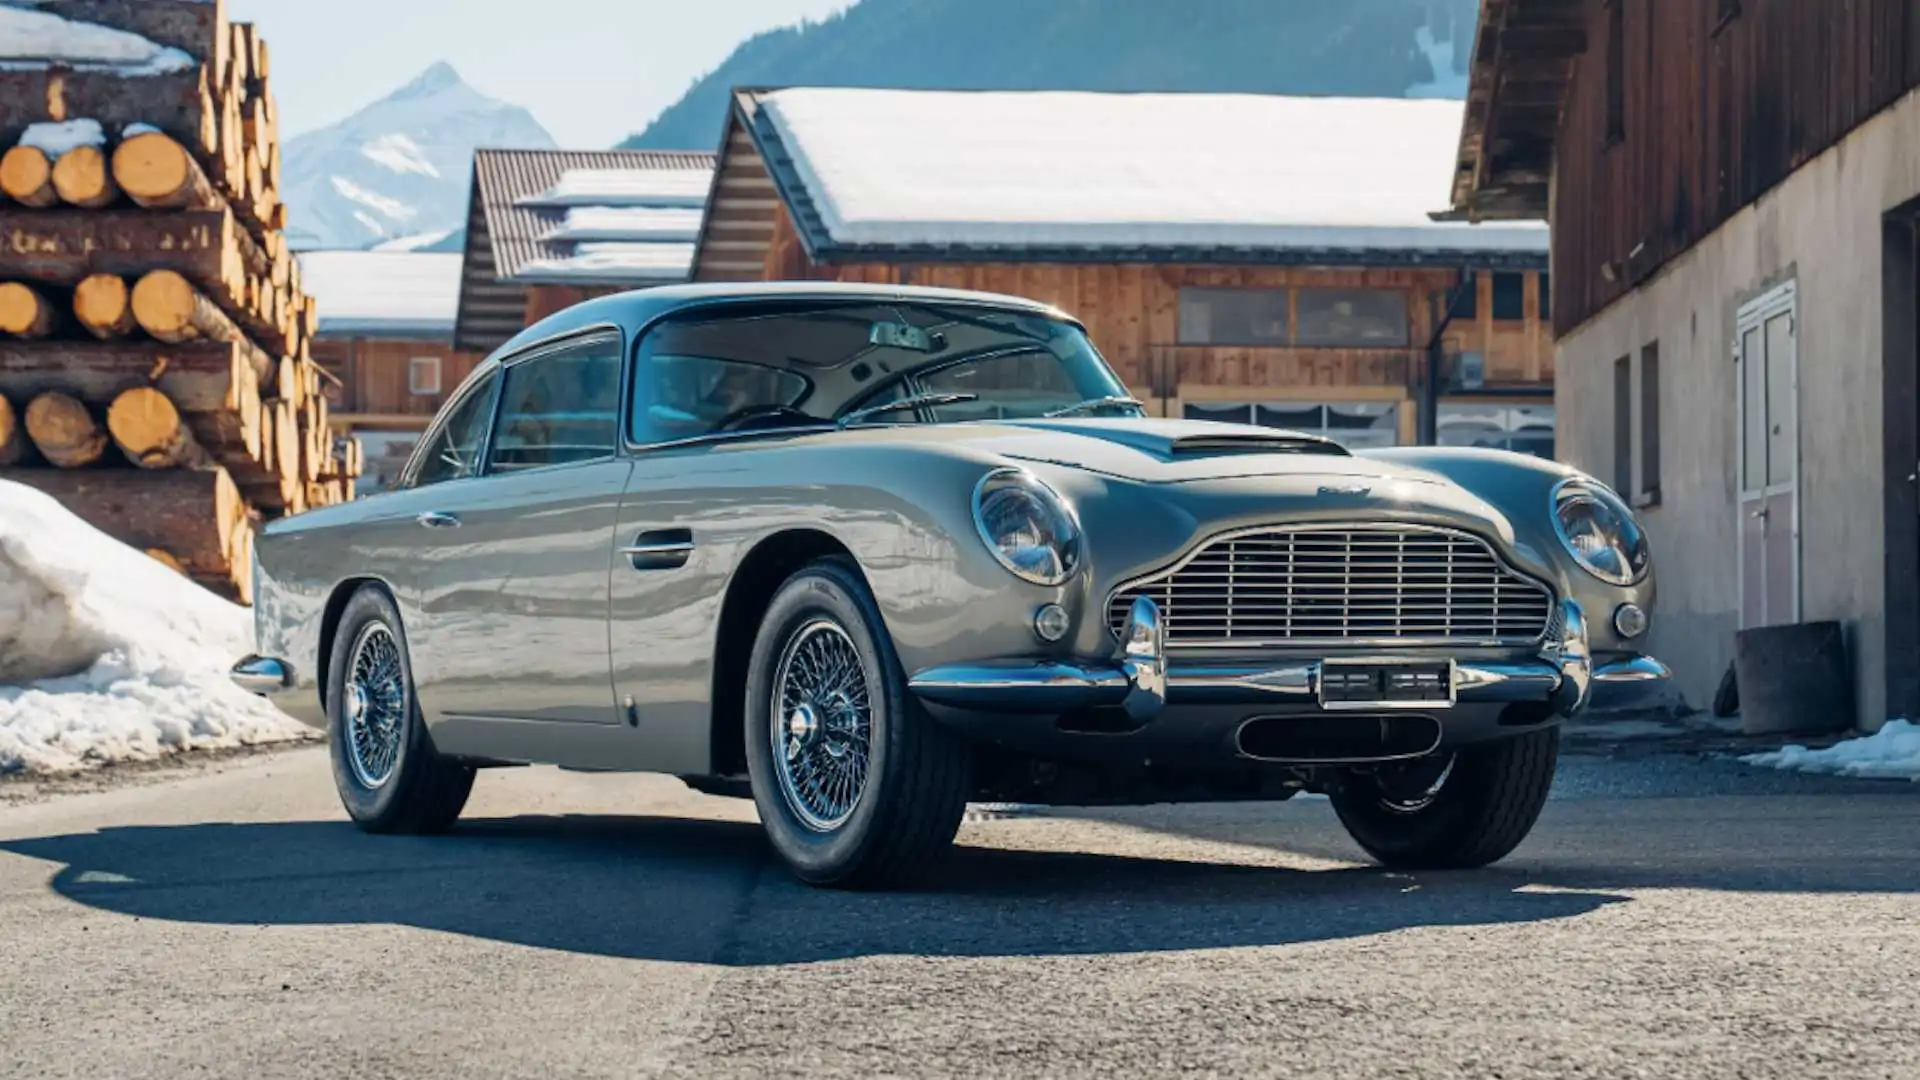 Sean Connery'nin 1964 model Aston Martin DB5'i satıldı!